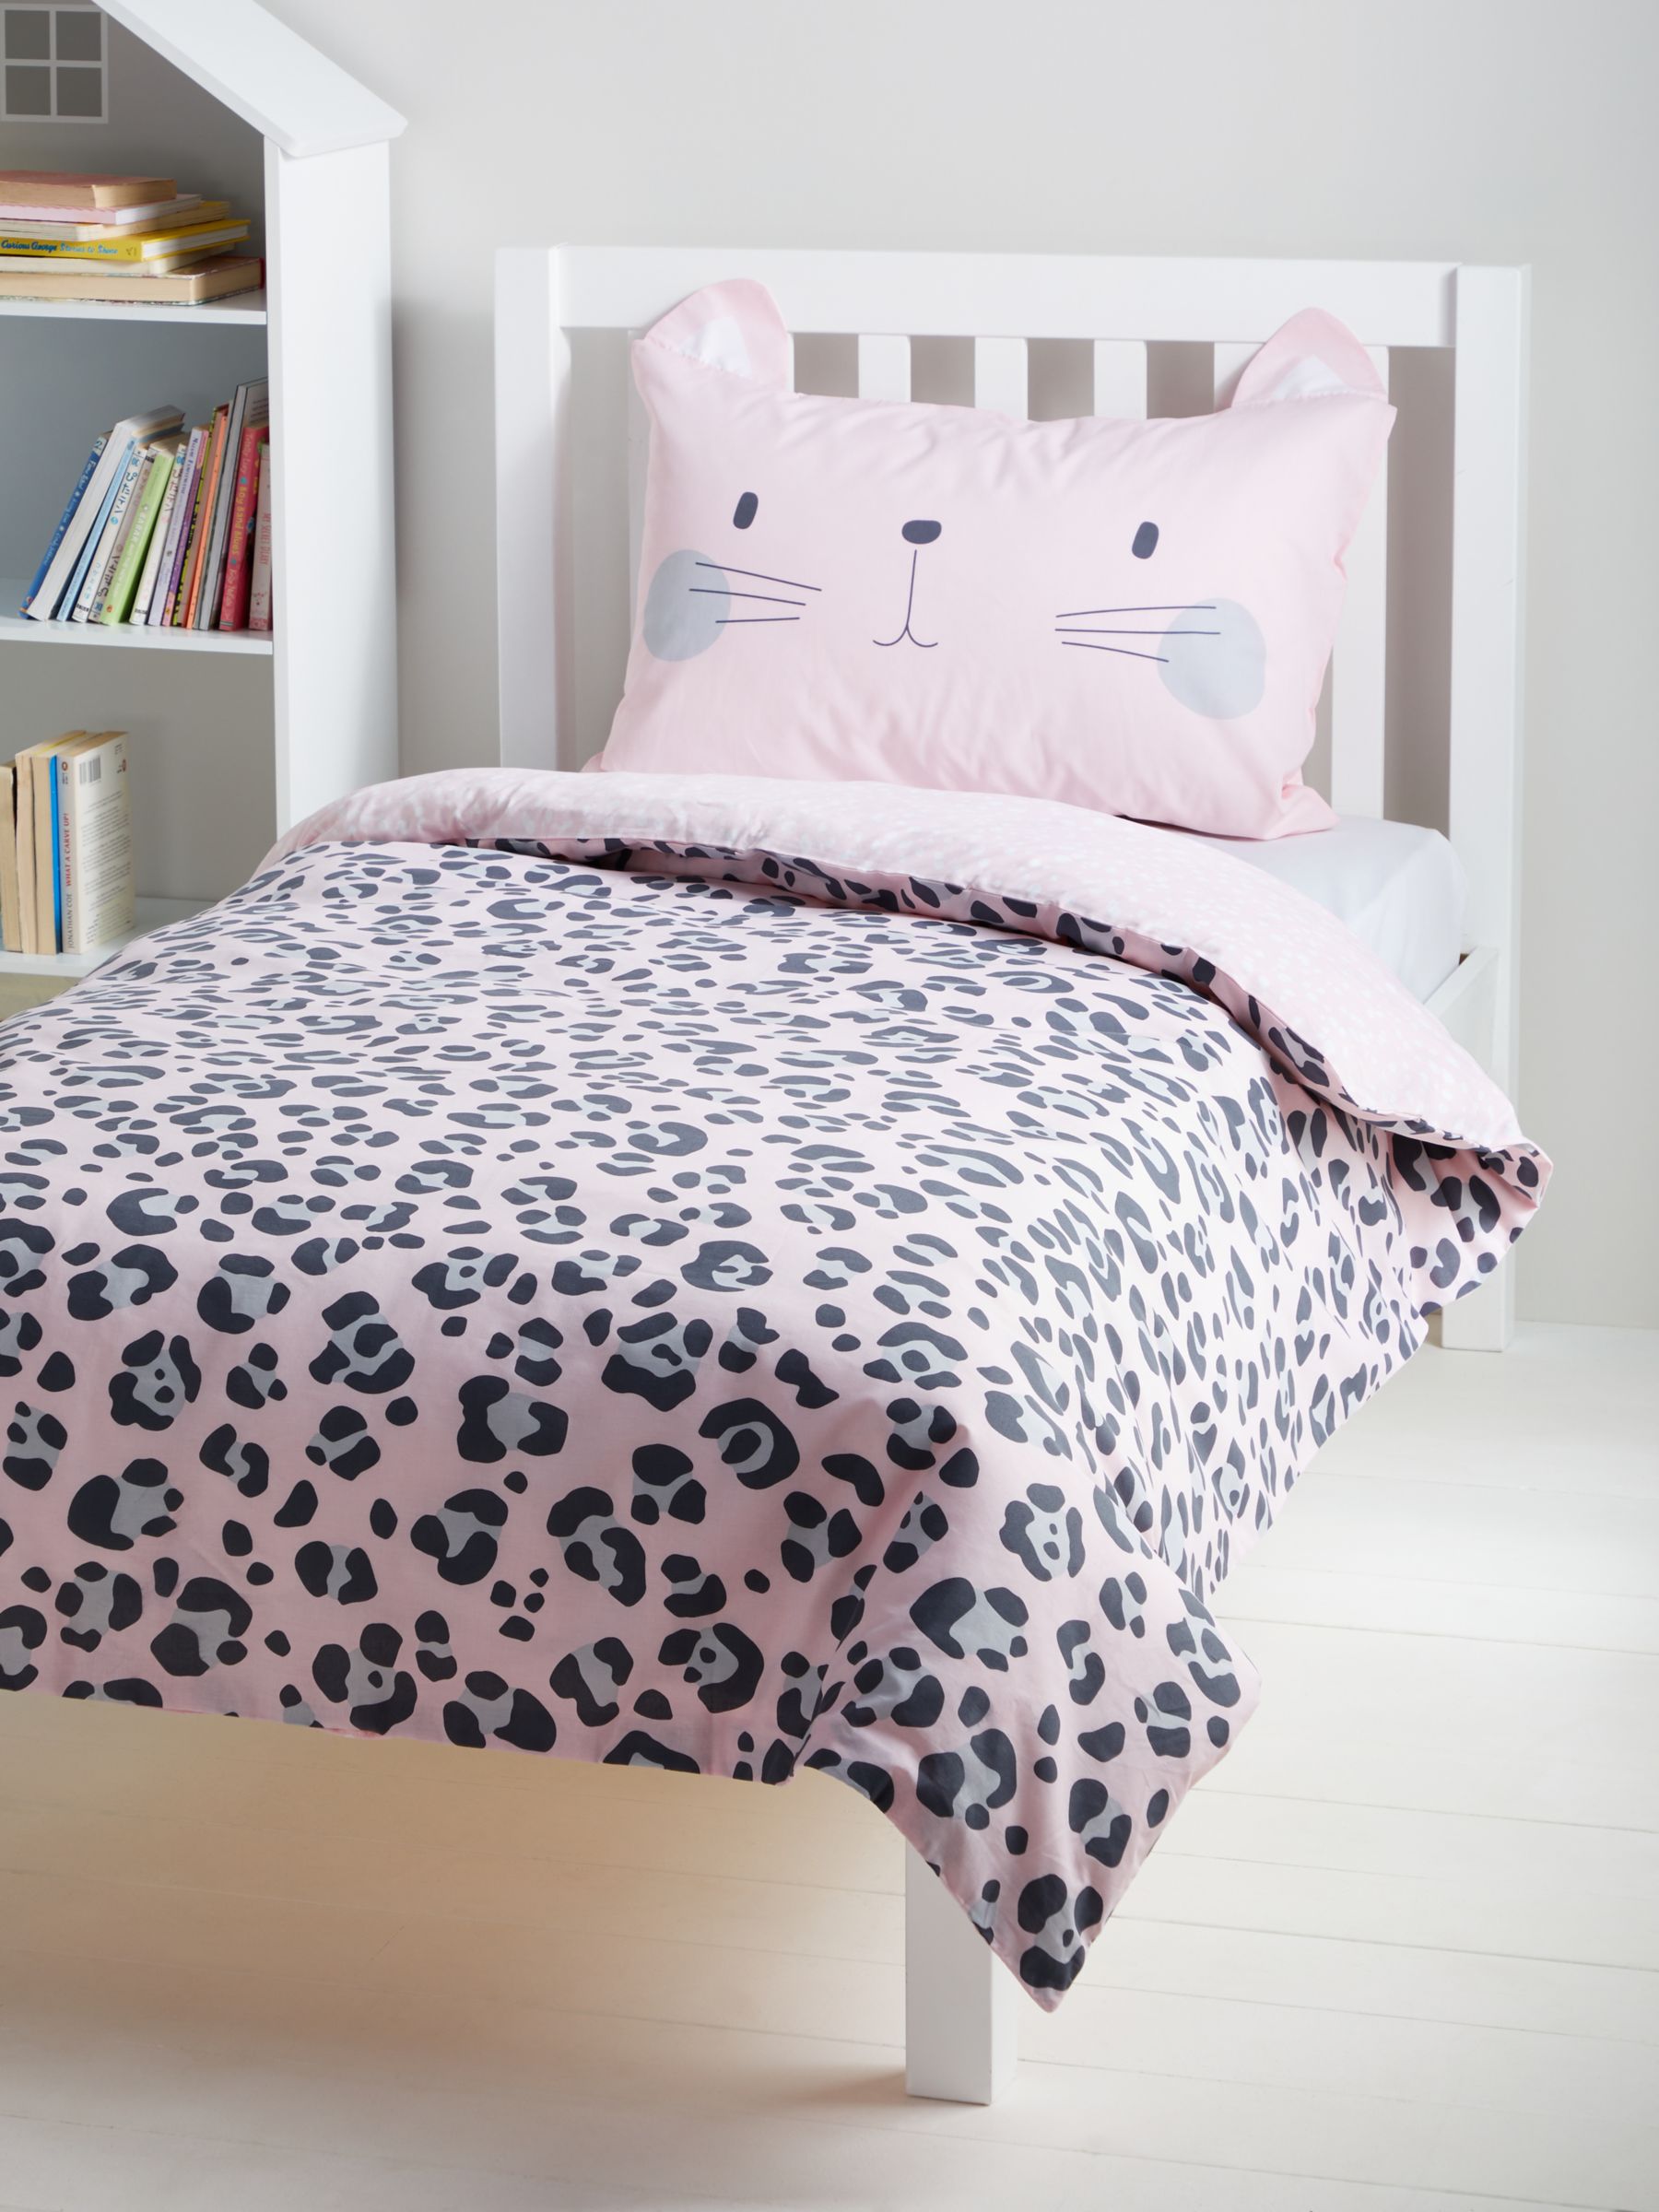 Luxury Animal Print Bedding - Foter